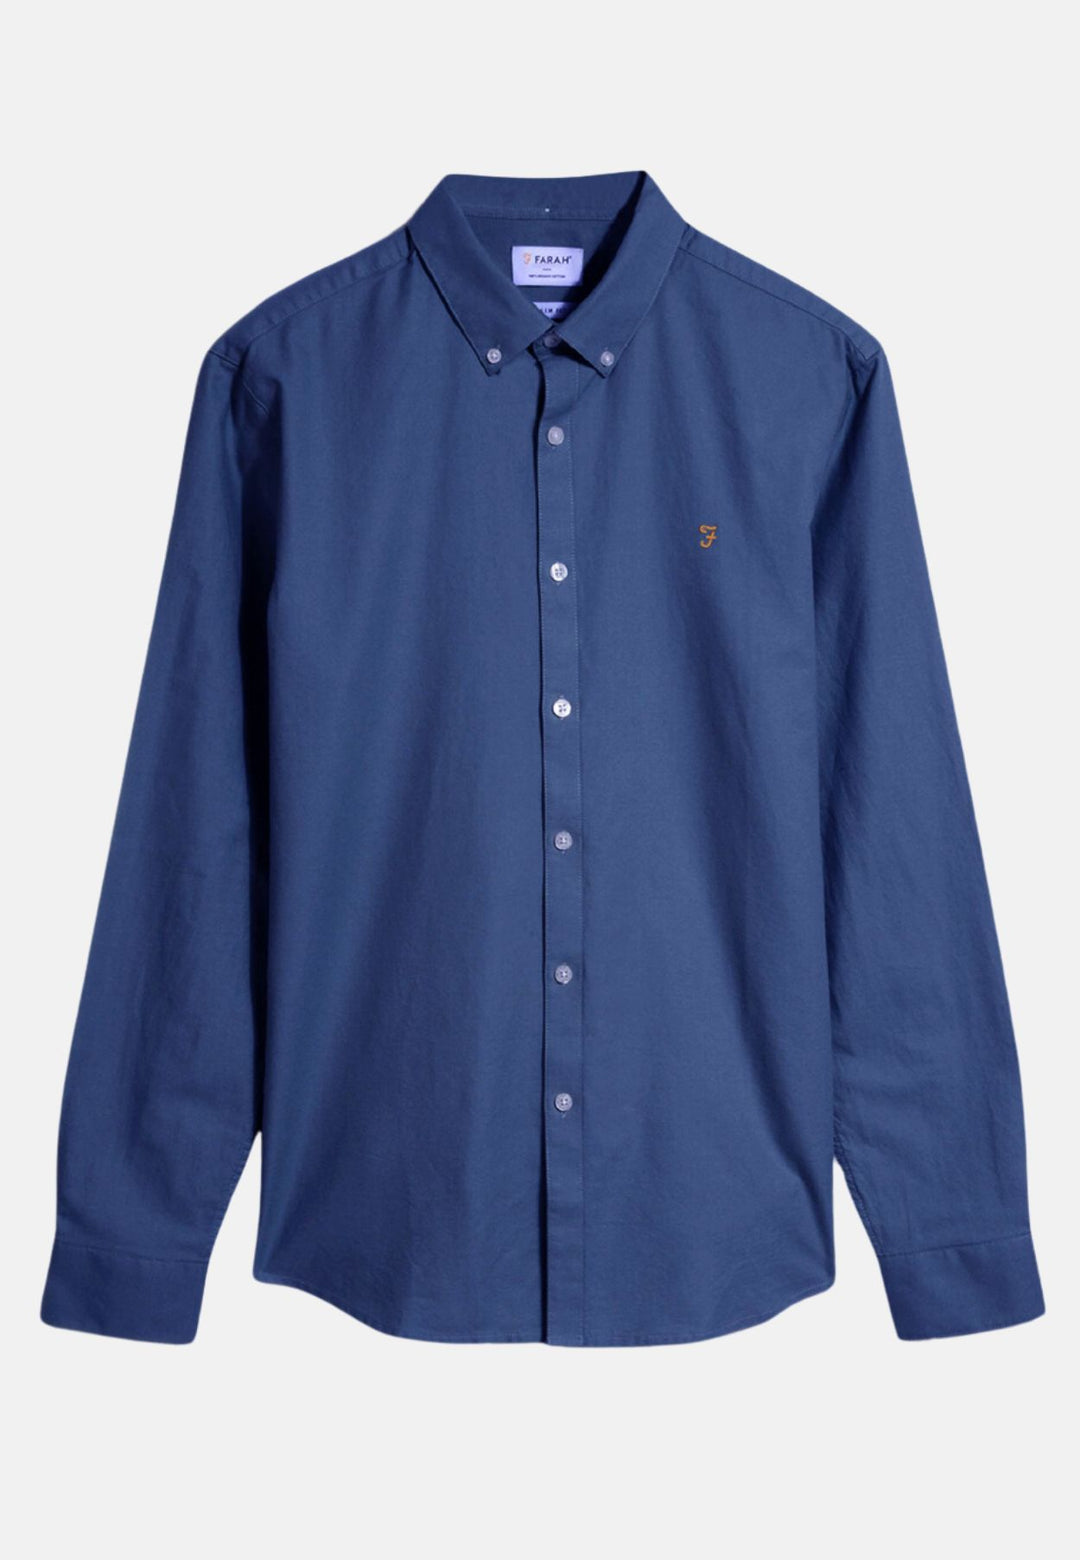 Men's Farah Brewer Oxford Shirt in Dark Blue